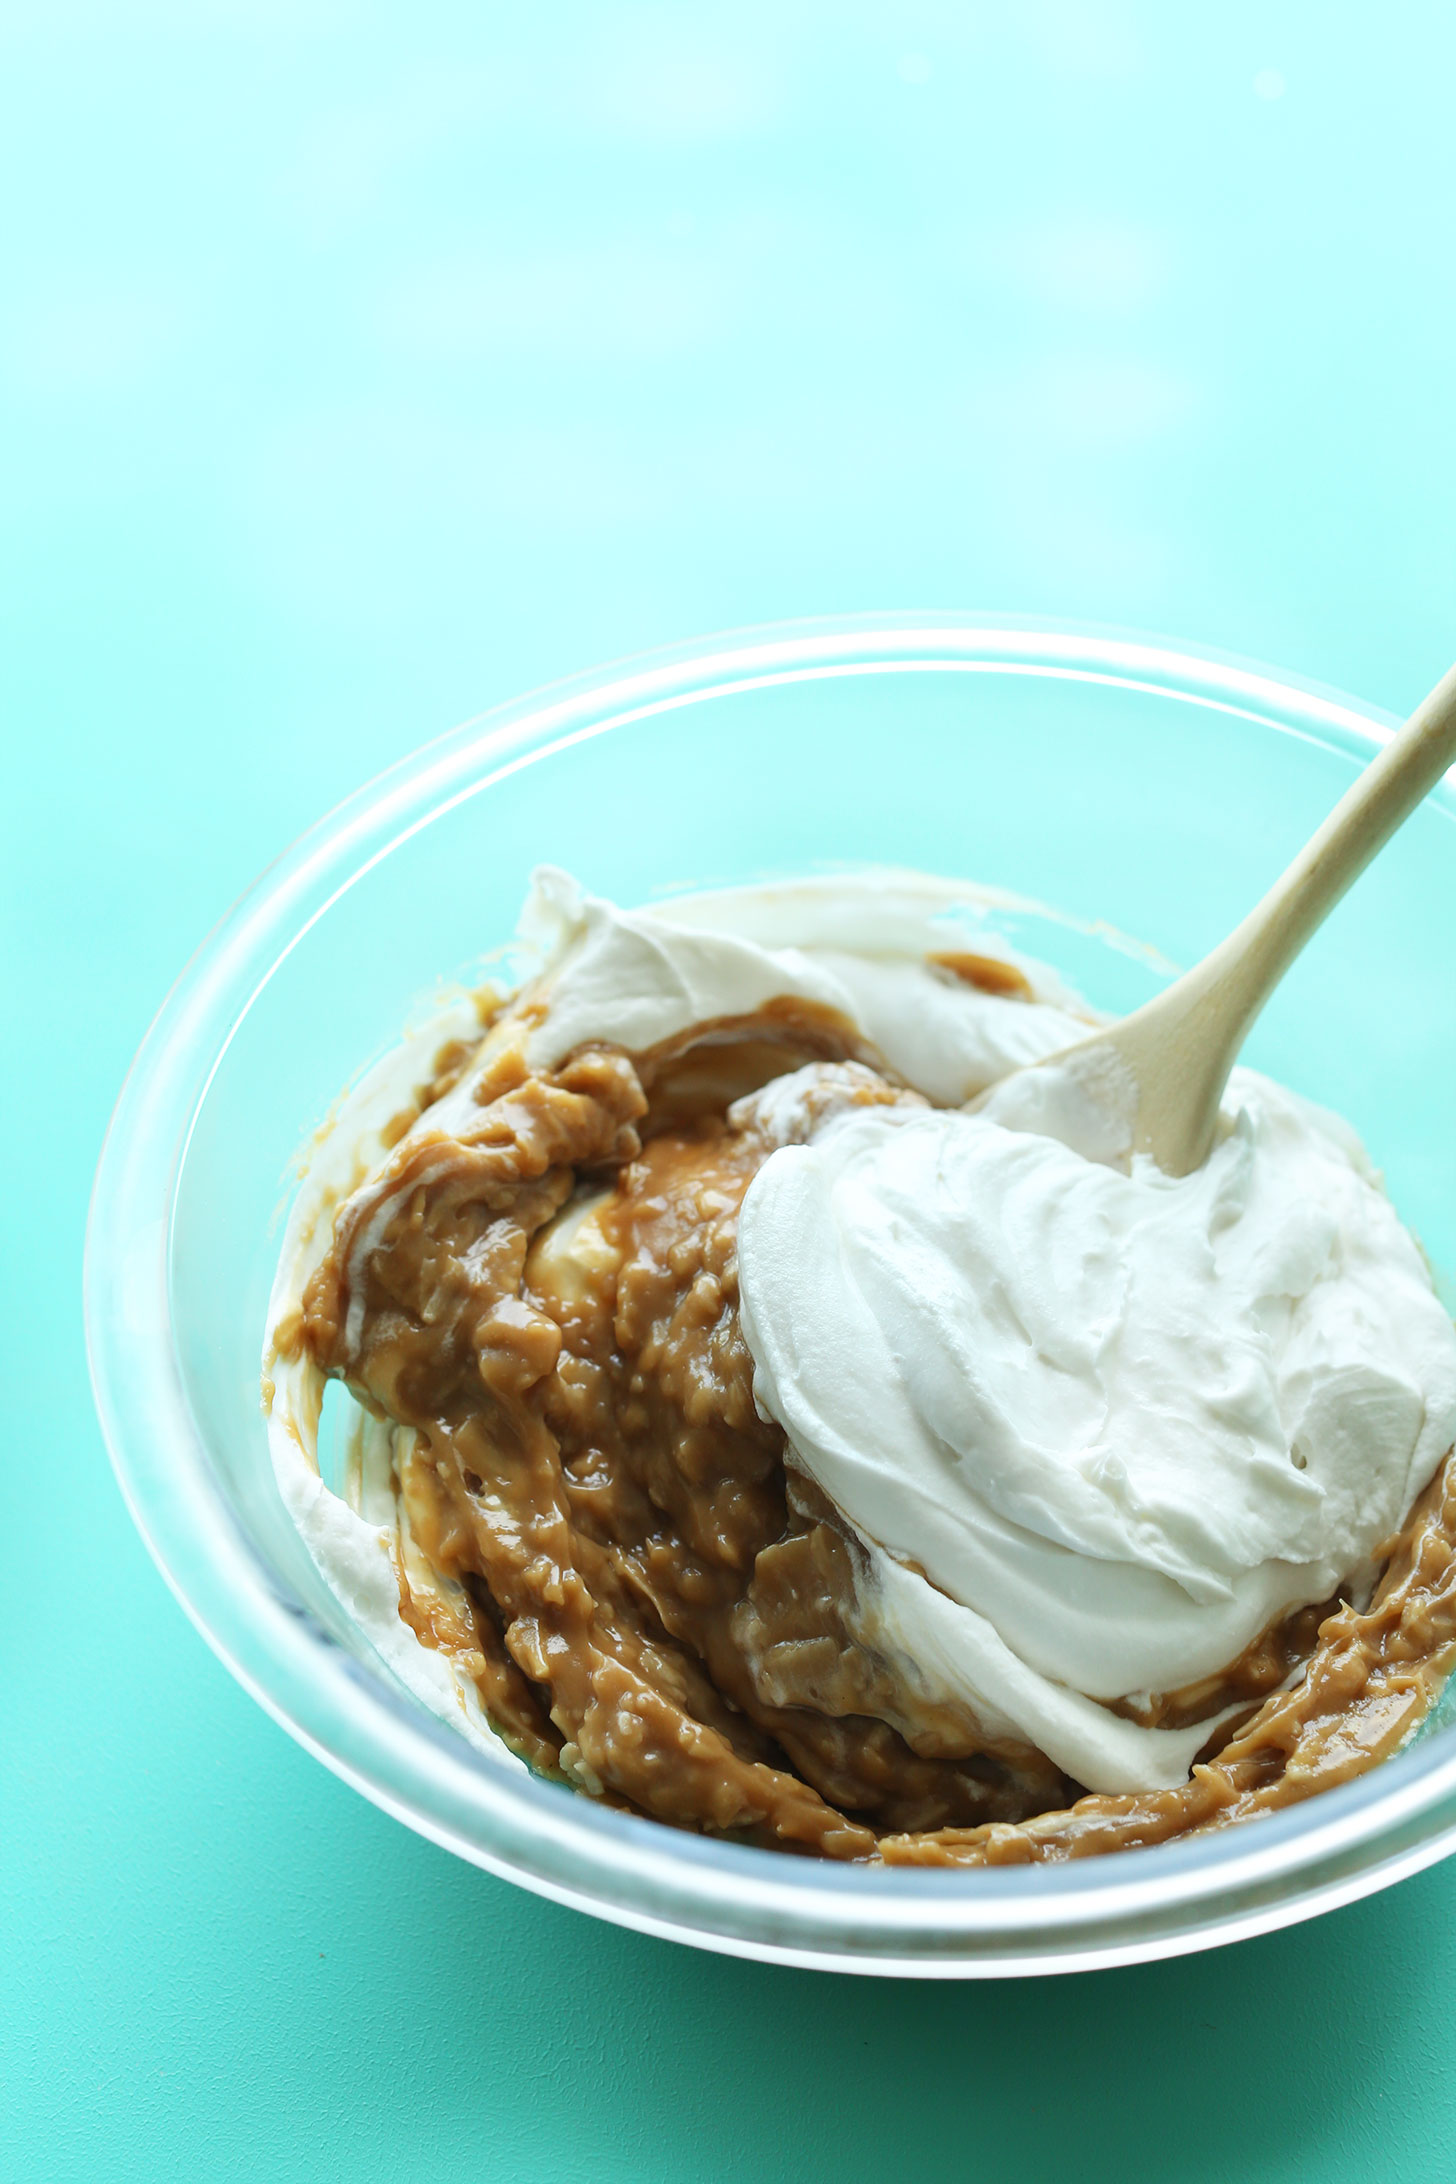 Stirring together ingredients for our gluten-free vegan Coconut Cream Pie recipe